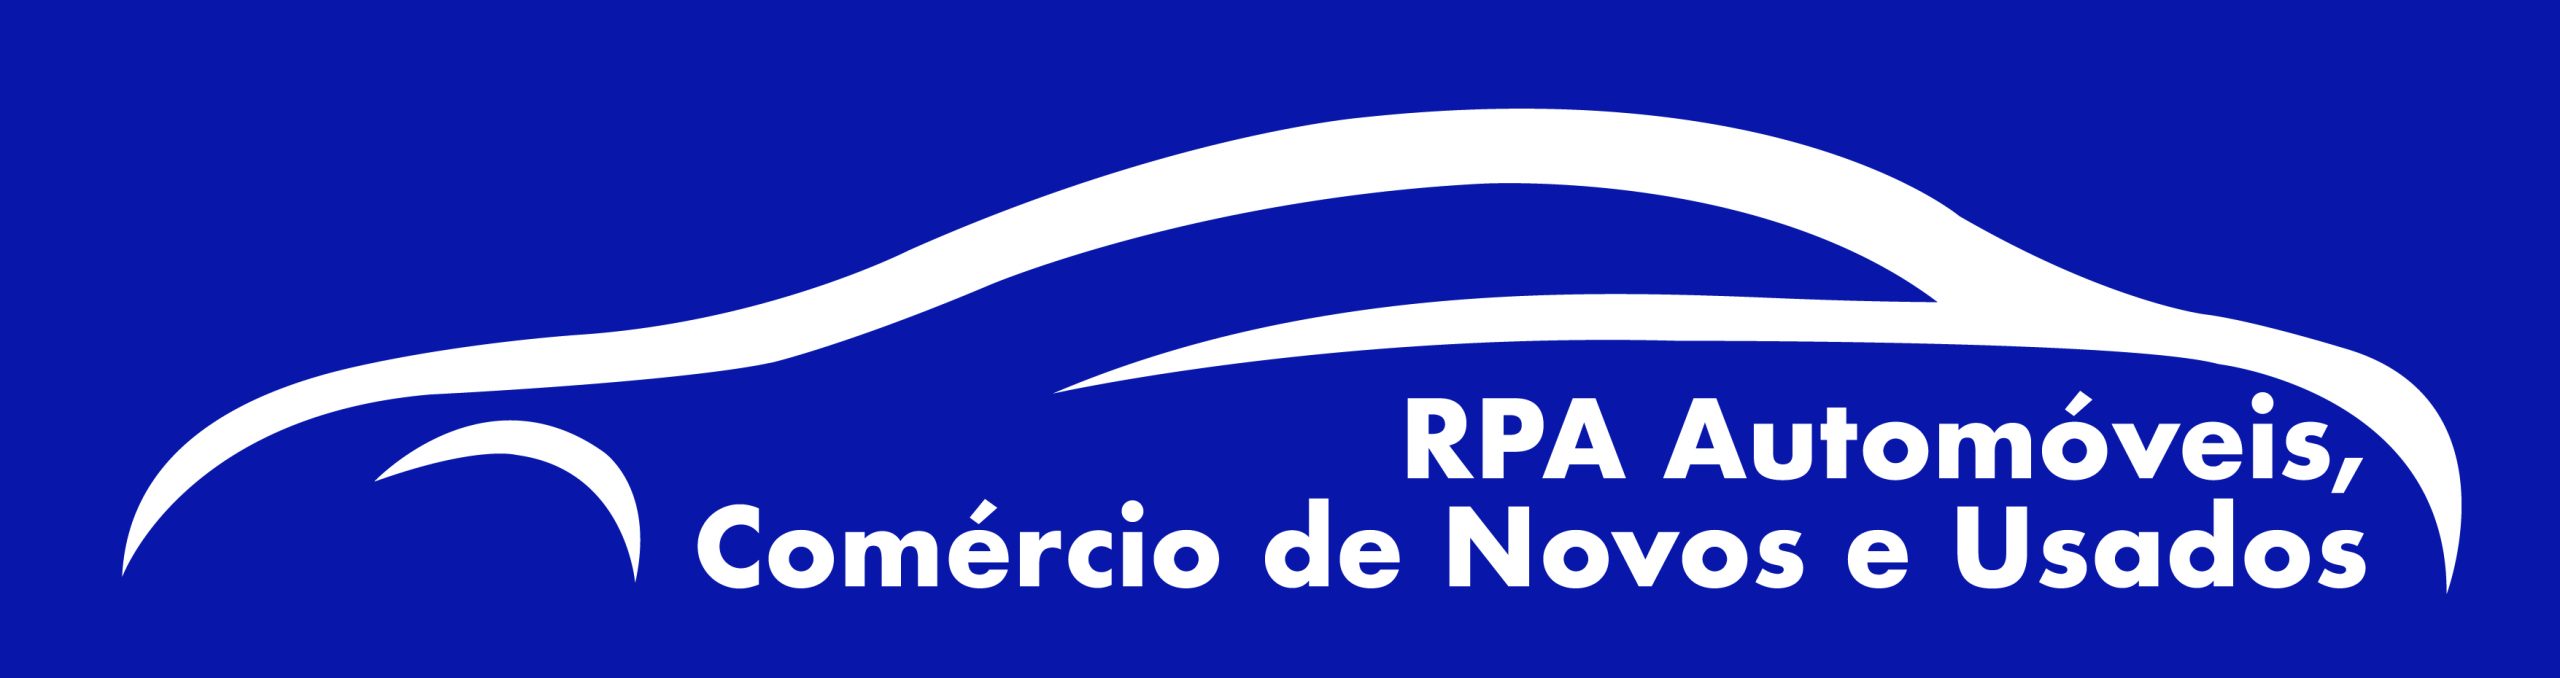 Logotipo_RPA_Automóveis-05